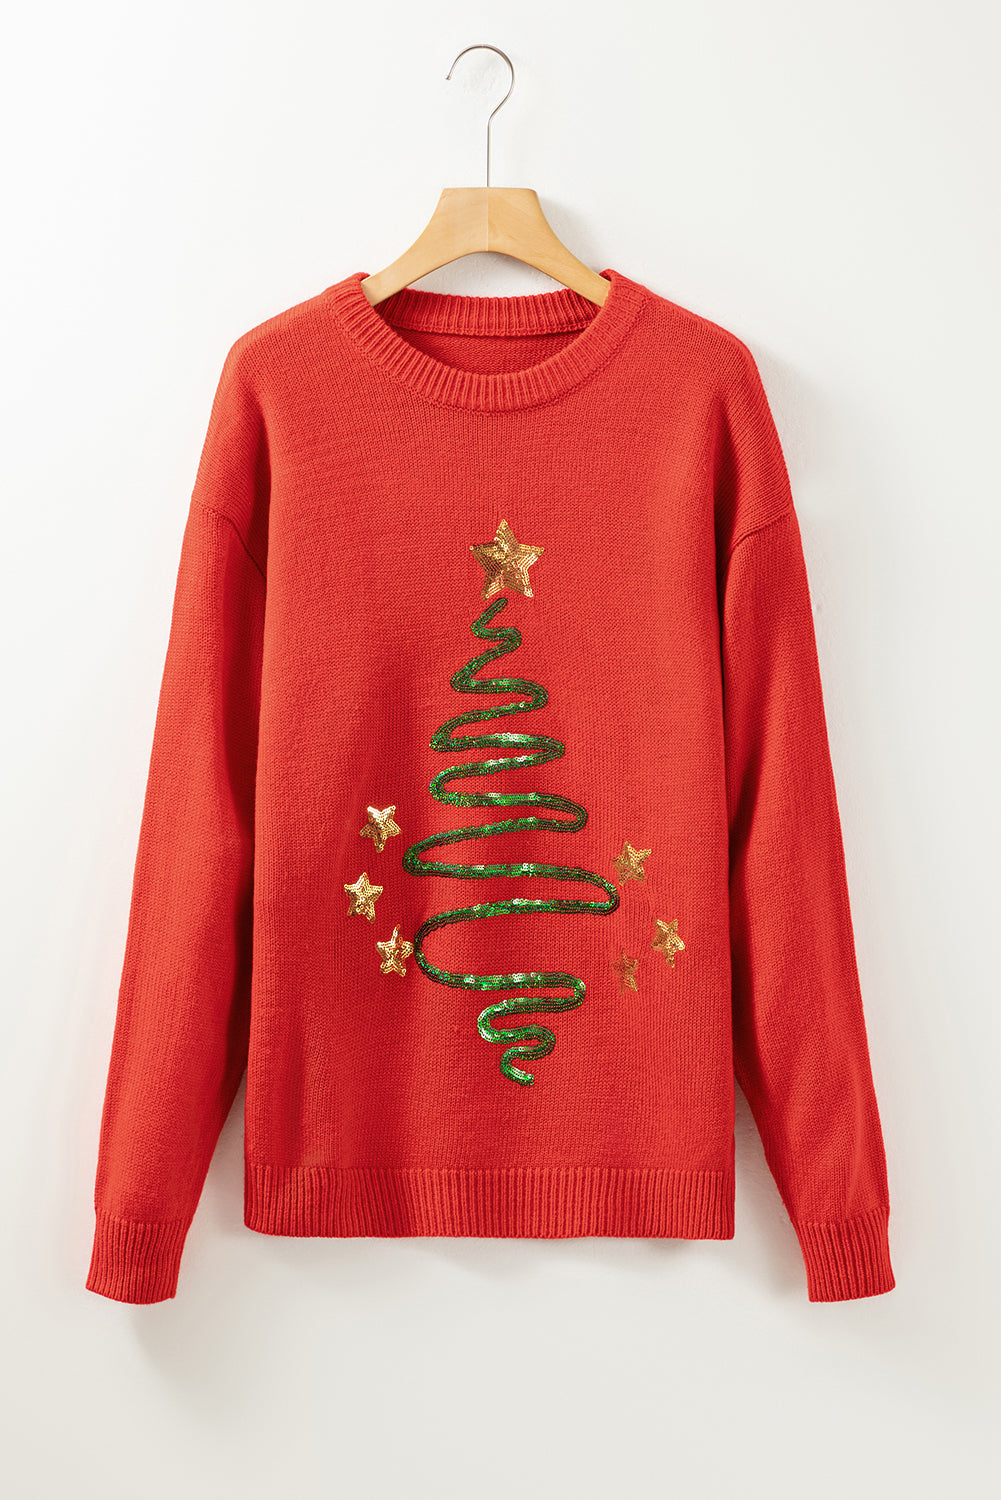 Vatrenocrveni pulover s skicom božićnog drvca sa šljokicama na spuštena ramena